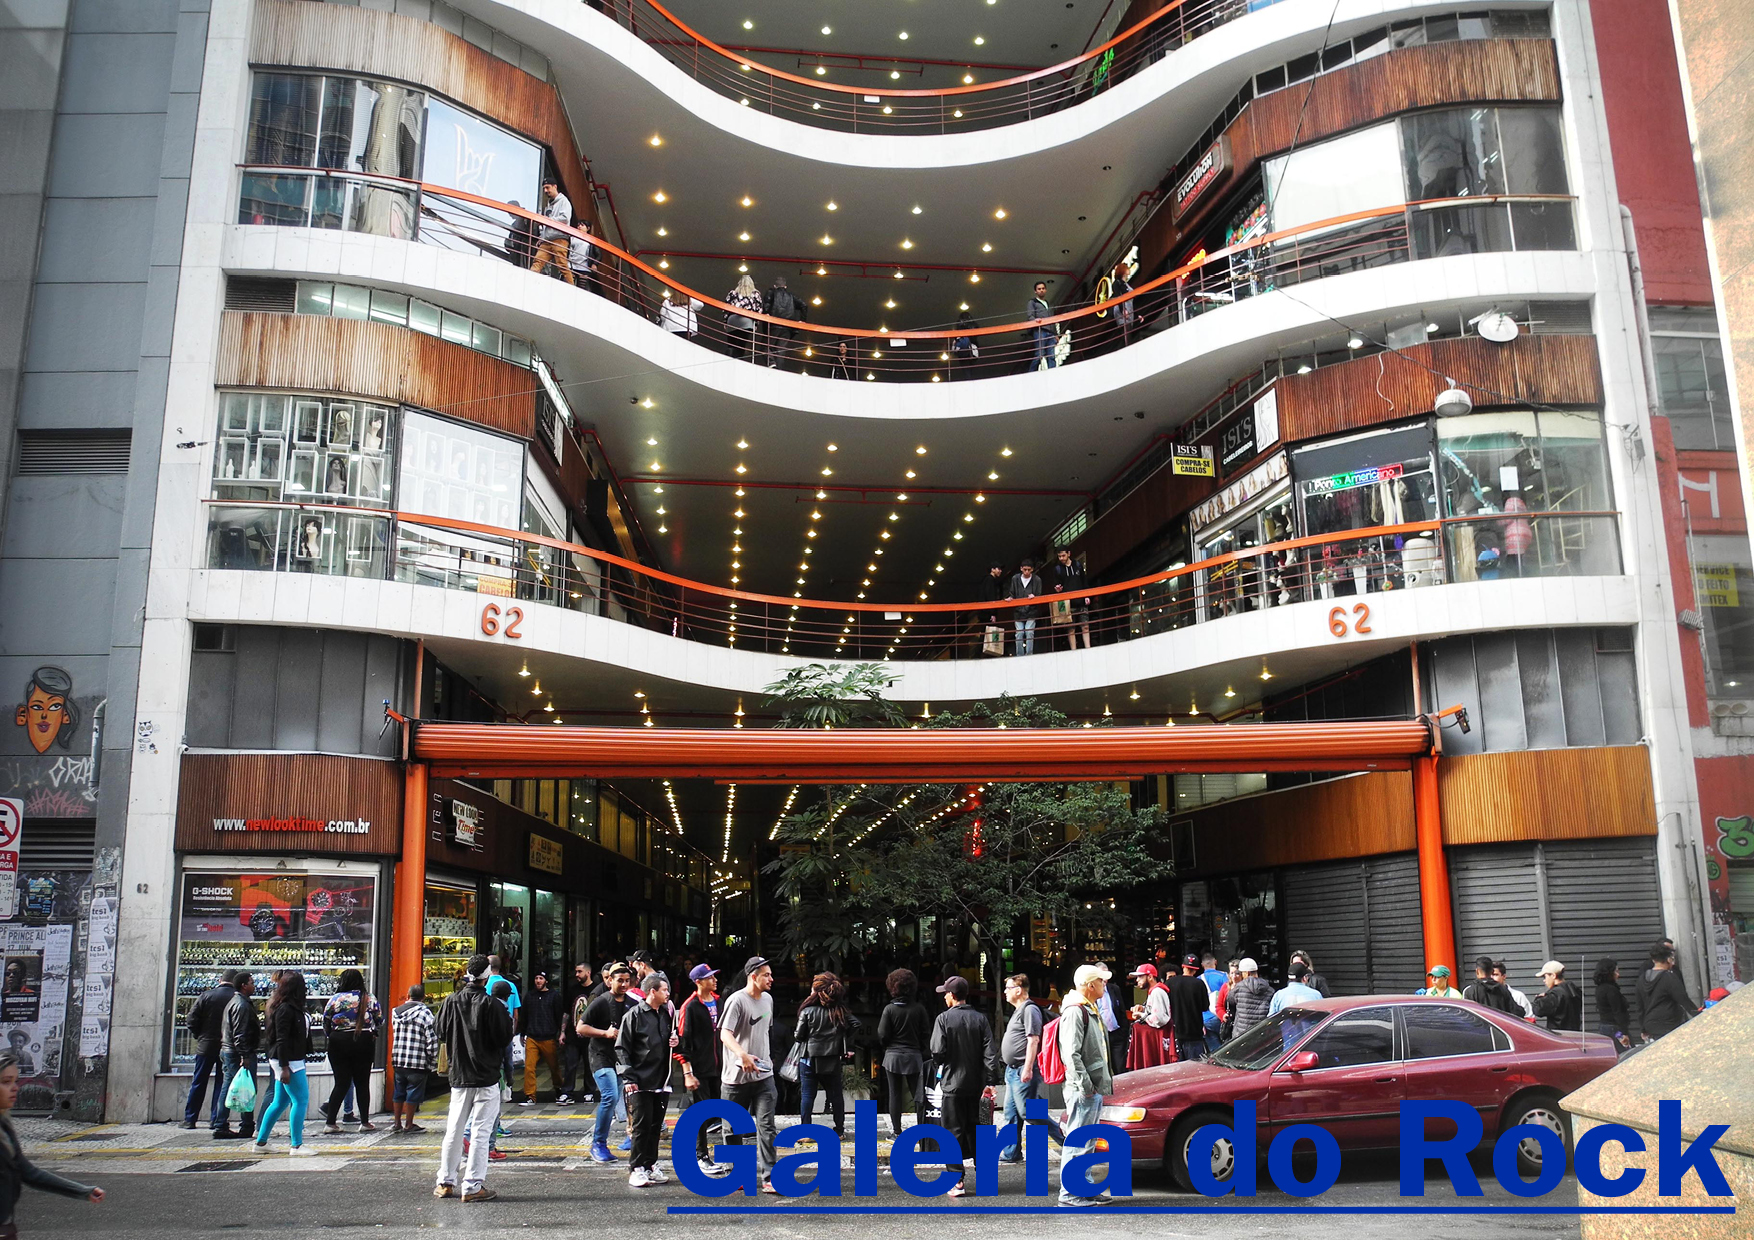 Galeria Do Rock Rock Gallery Shopping Mall in Dowtown Sao Paulo - Sao  Paulo, Brazil Editorial Stock Photo - Image of display, inside: 107907638